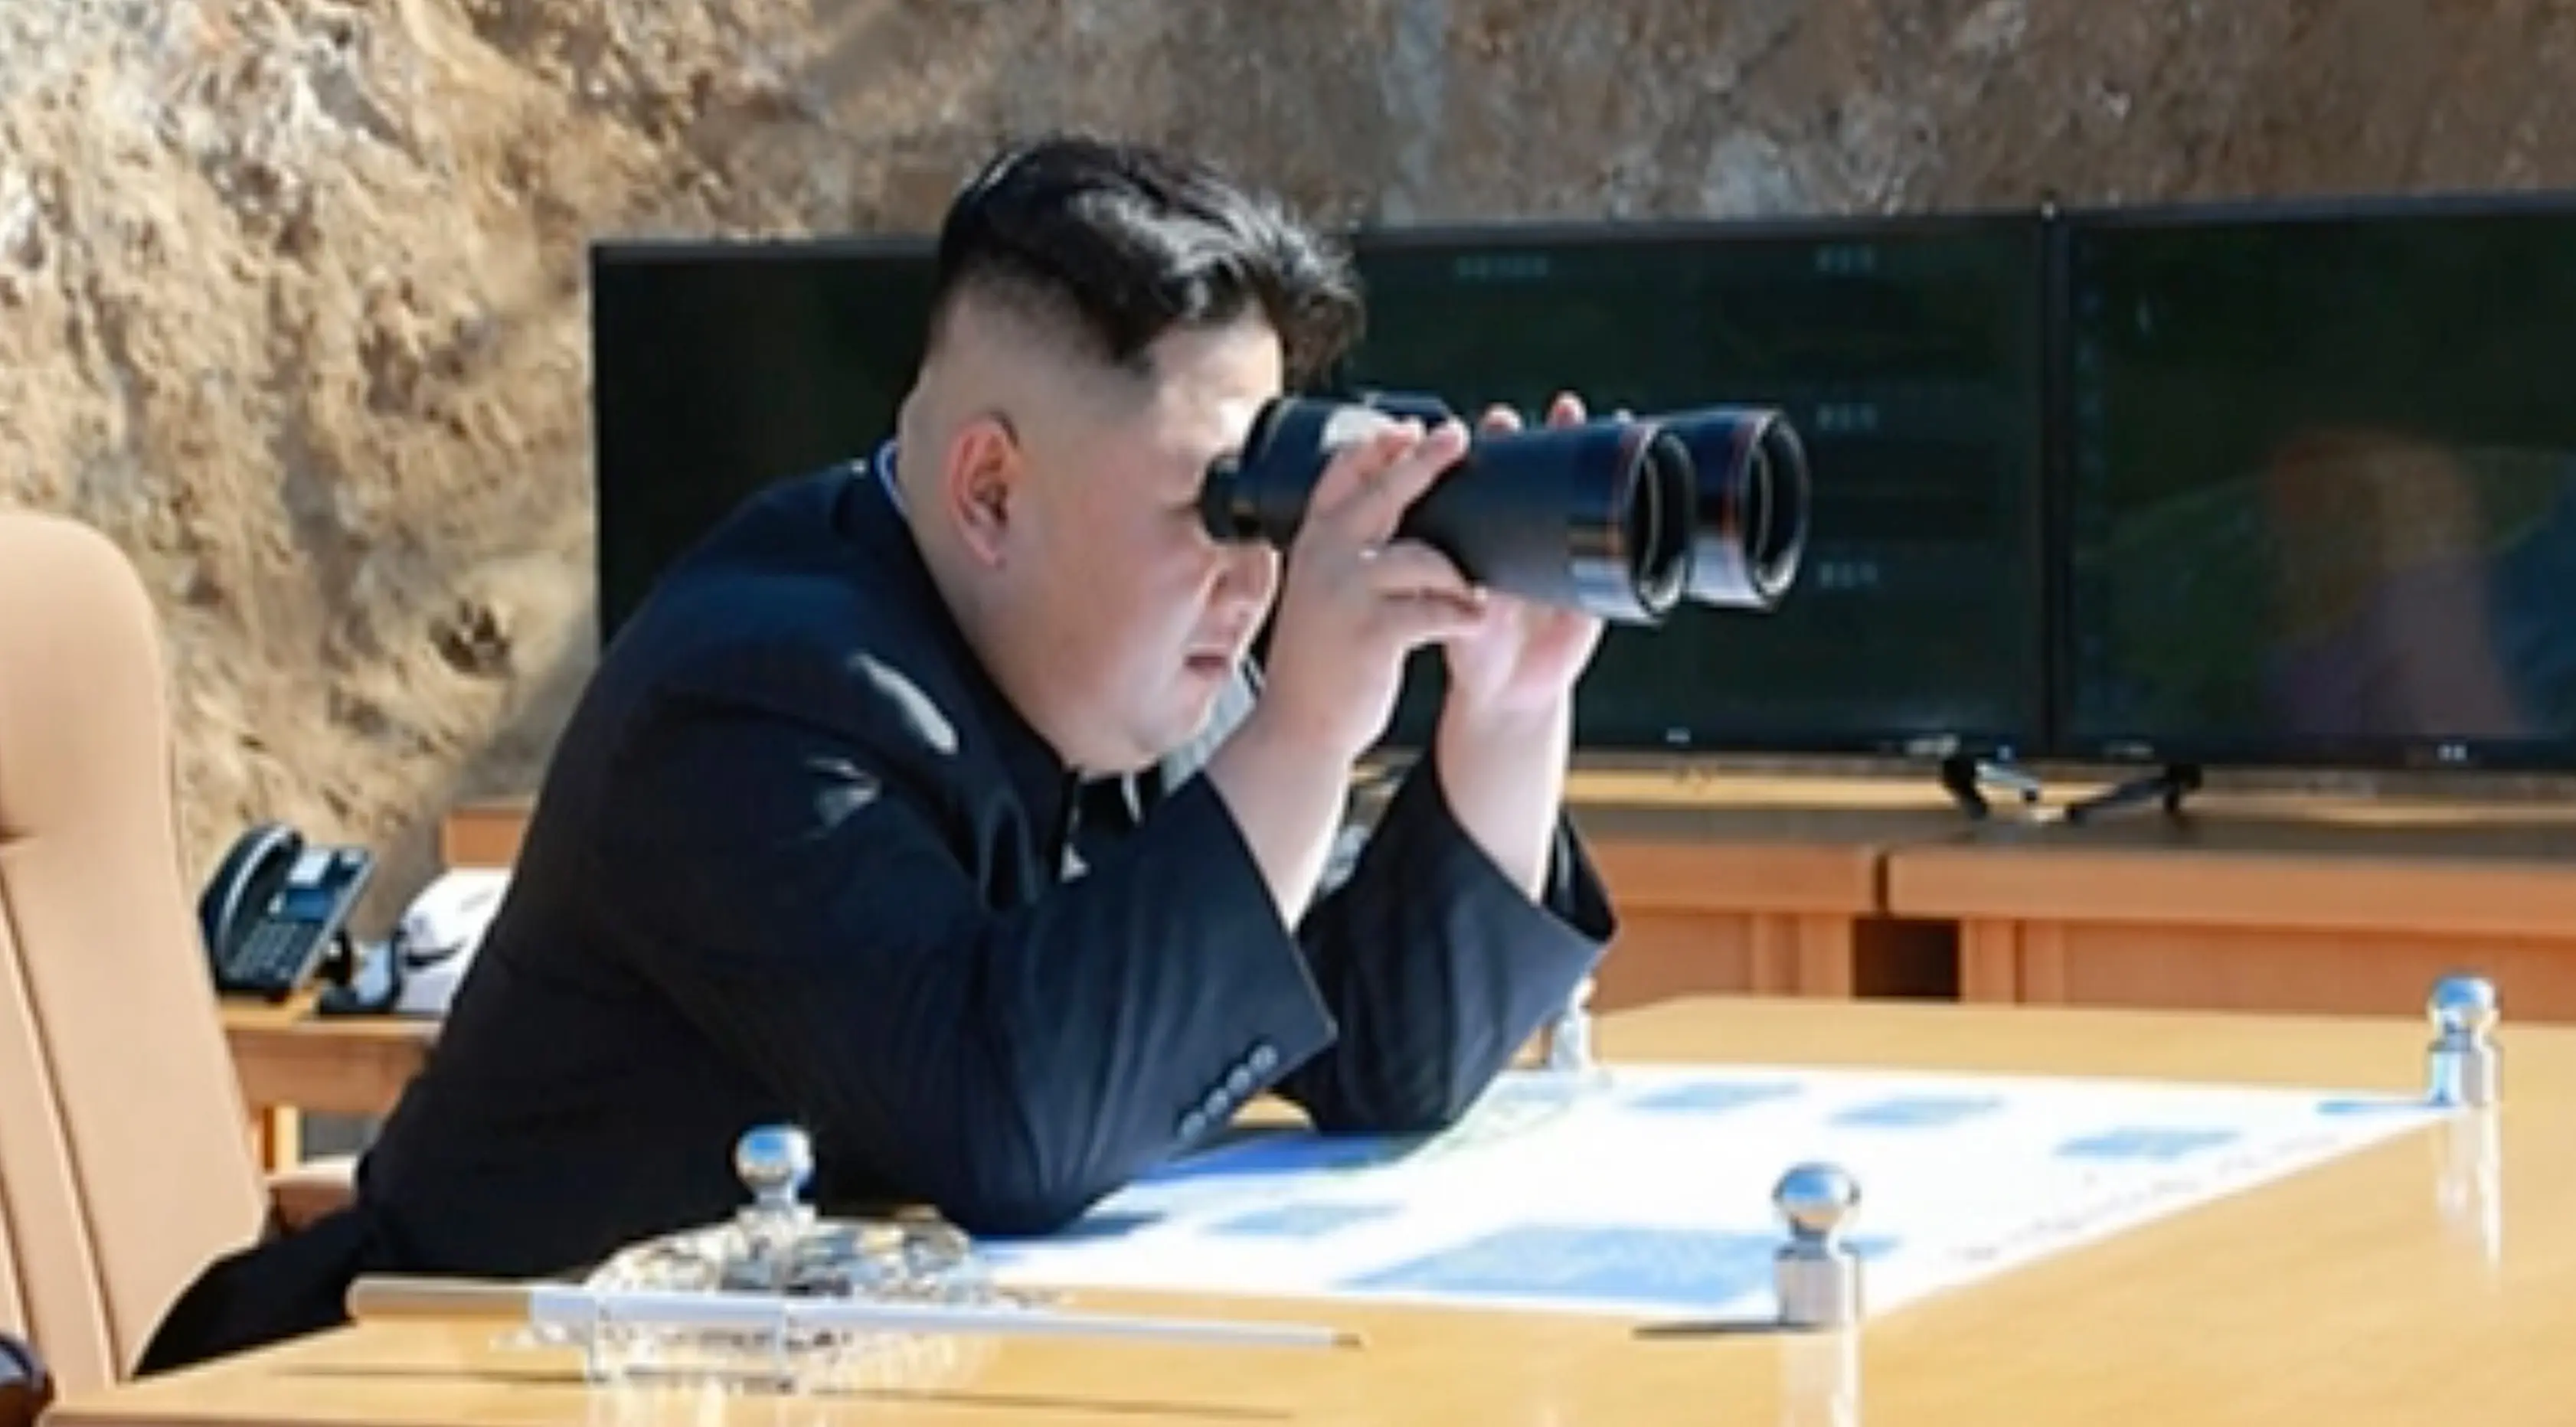 Pemimpin Korut, Kim Jong-un menggunakan teropong  menyaksikan peluncuran balistik antarbenua Hwasong-14 Rudal, ICBM, di barat laut Korea Utara. Korea Utara mengklaim telah menguji rudal balistik antarbenua. (KRT via AP Video)